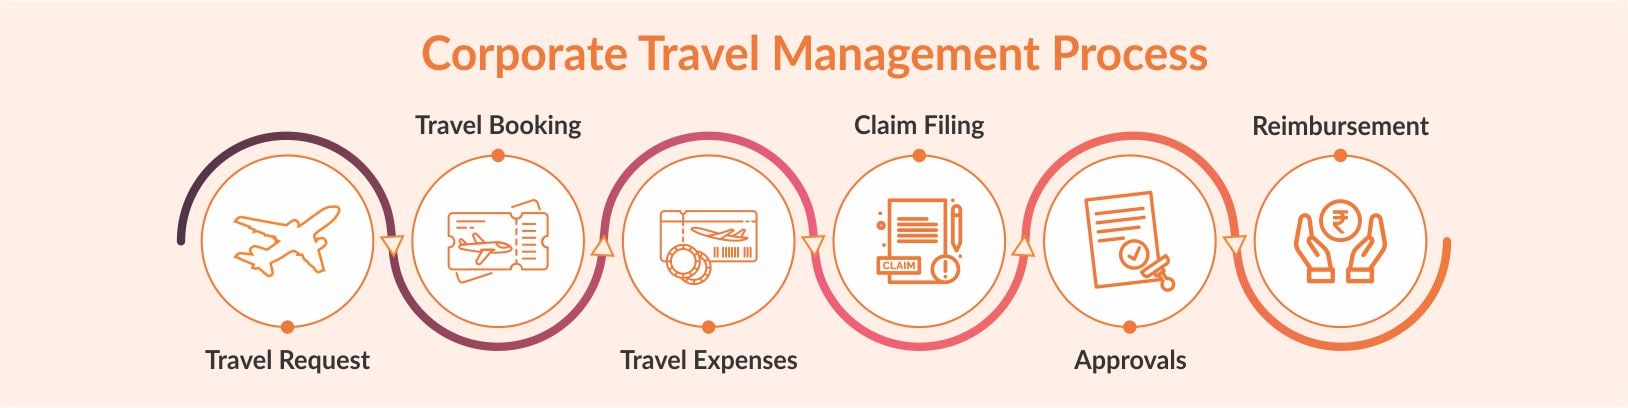 corporate travel management process